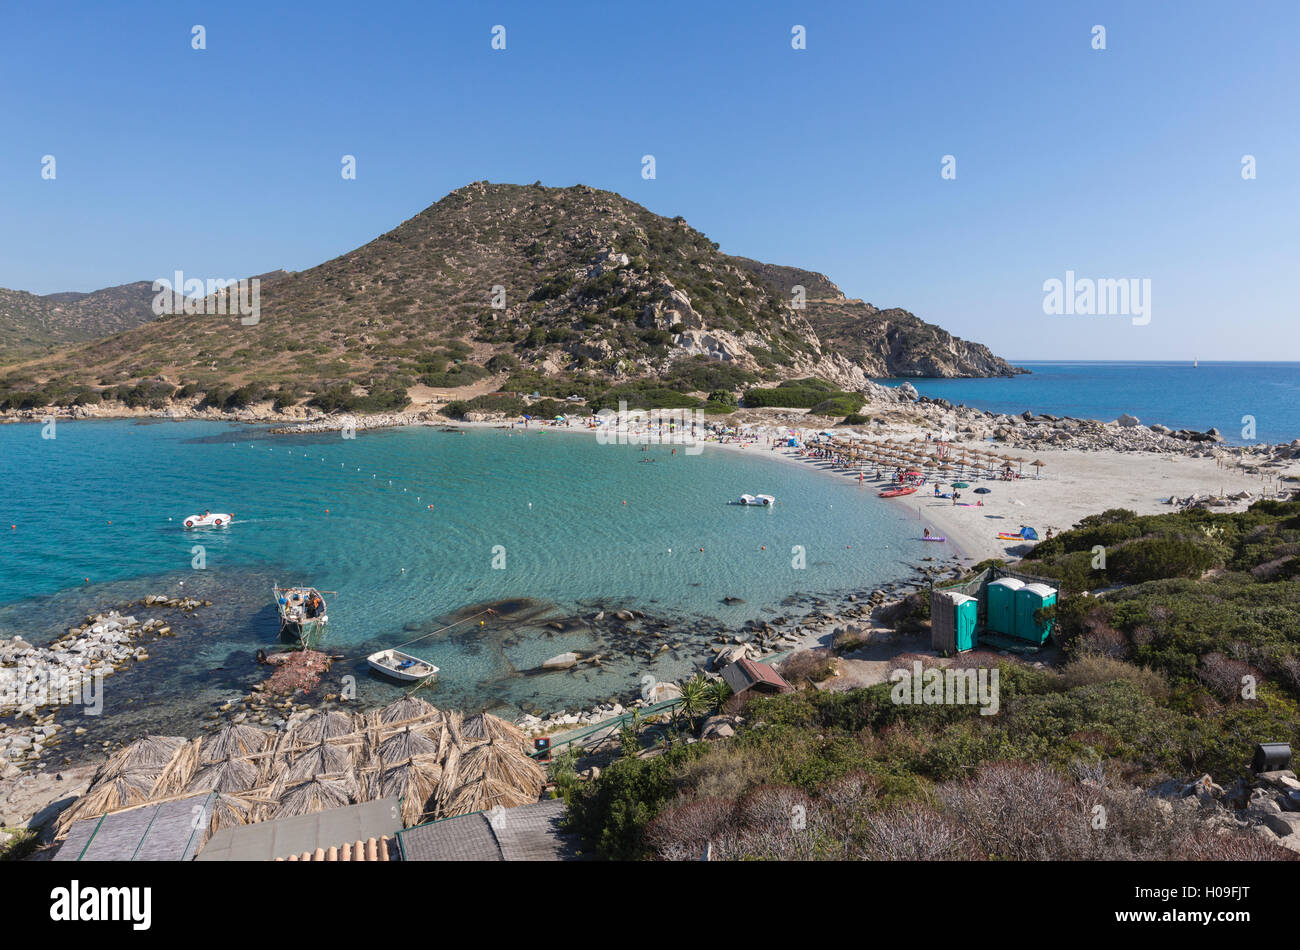 Top view of the bay with turquoise sea and the sandy beach, Punta Molentis, Villasimius, Cagliari, Sardinia, Italy Stock Photo